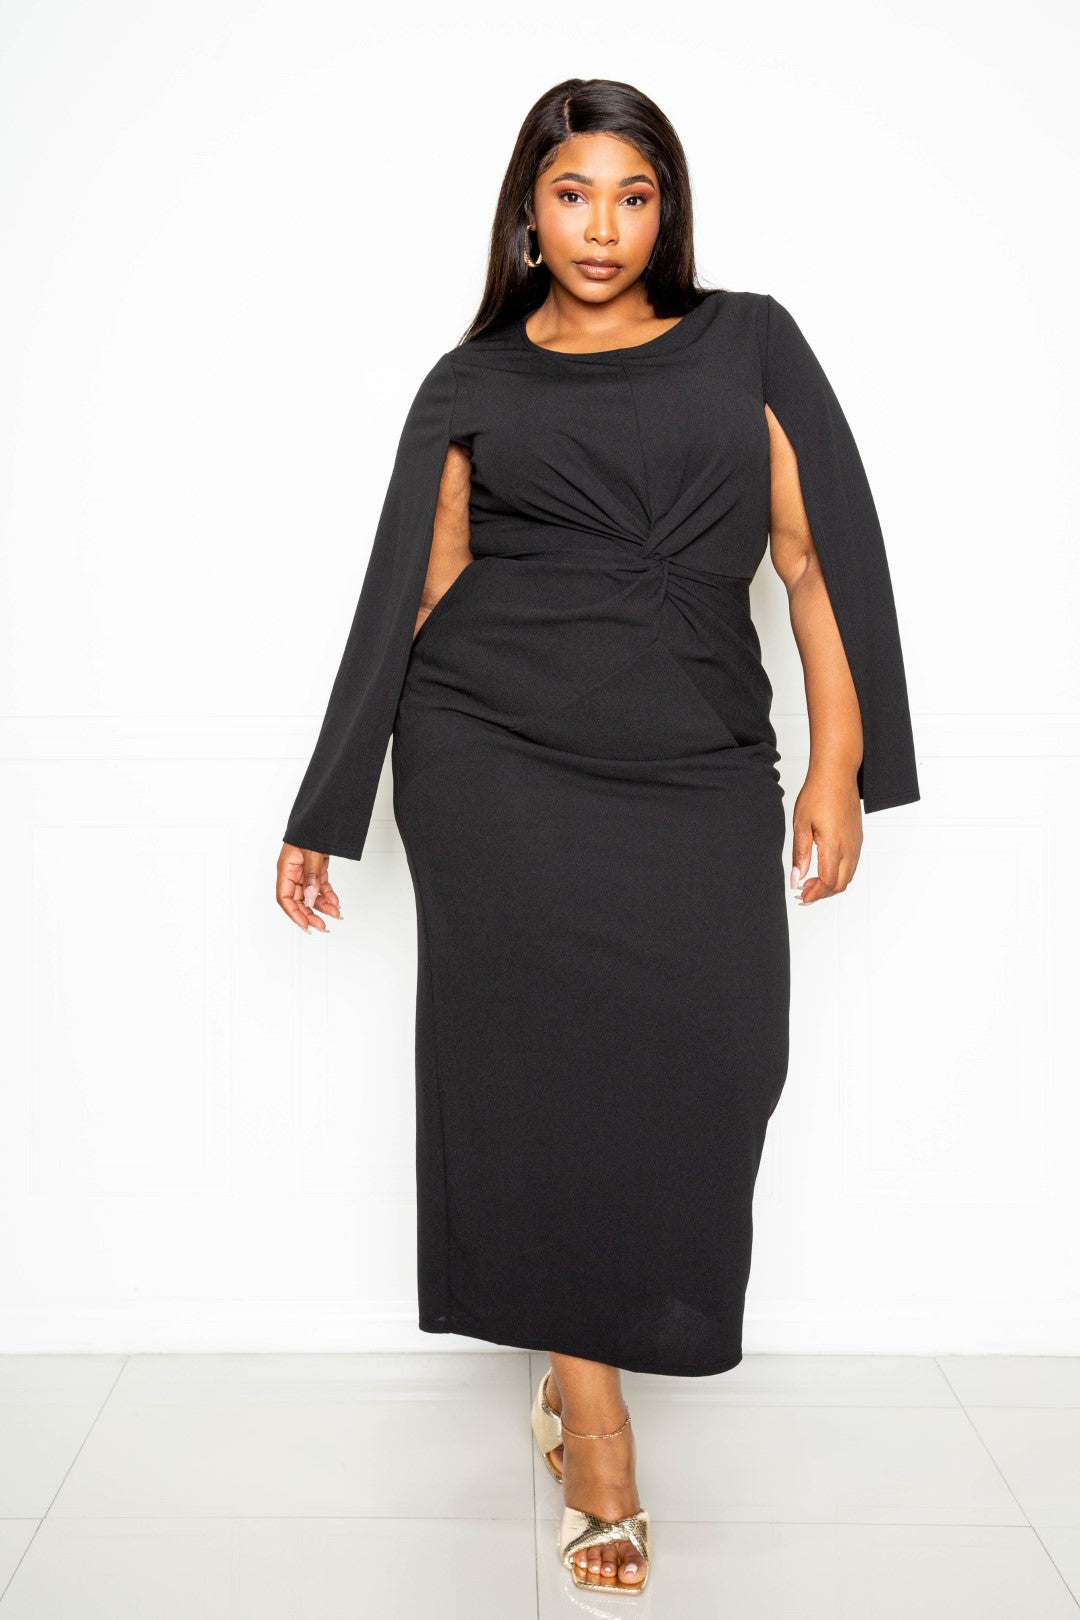 Black Cape Sleeve Dress With Knot Detail - Tigbuls Variety Fashion